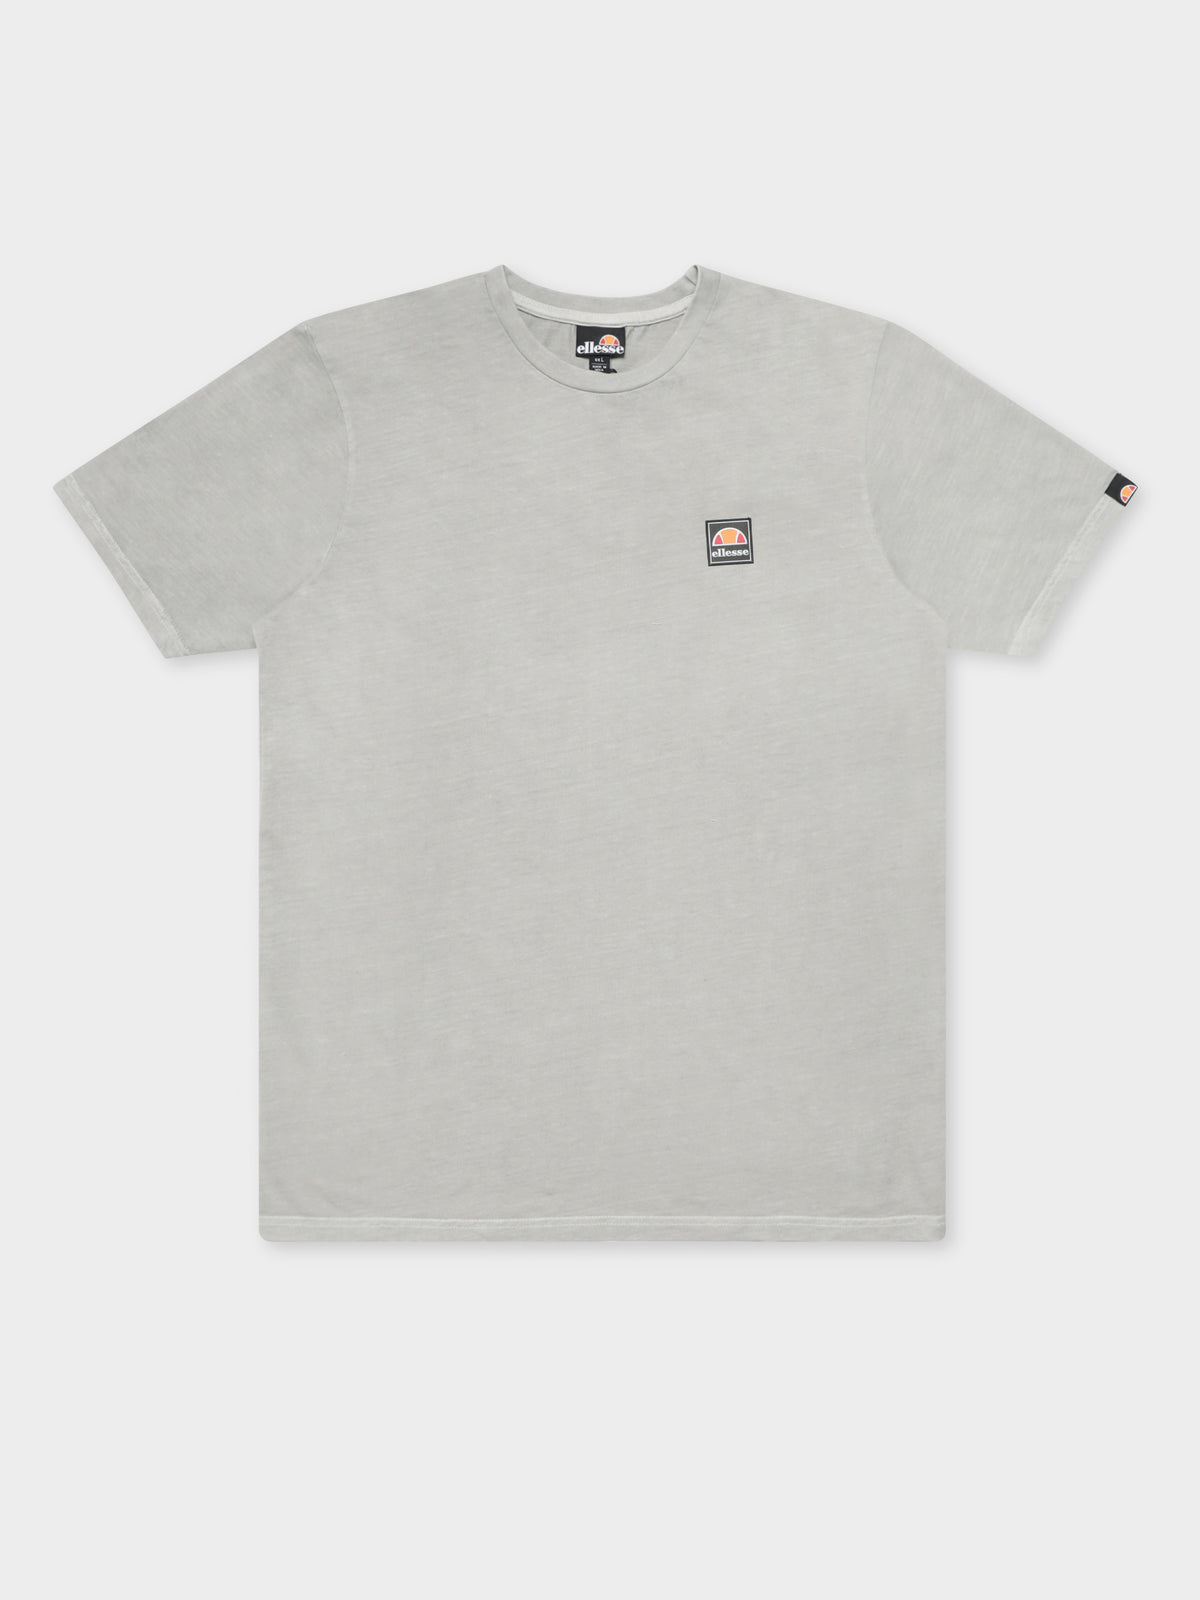 Jourdain T-Shirt in Grey